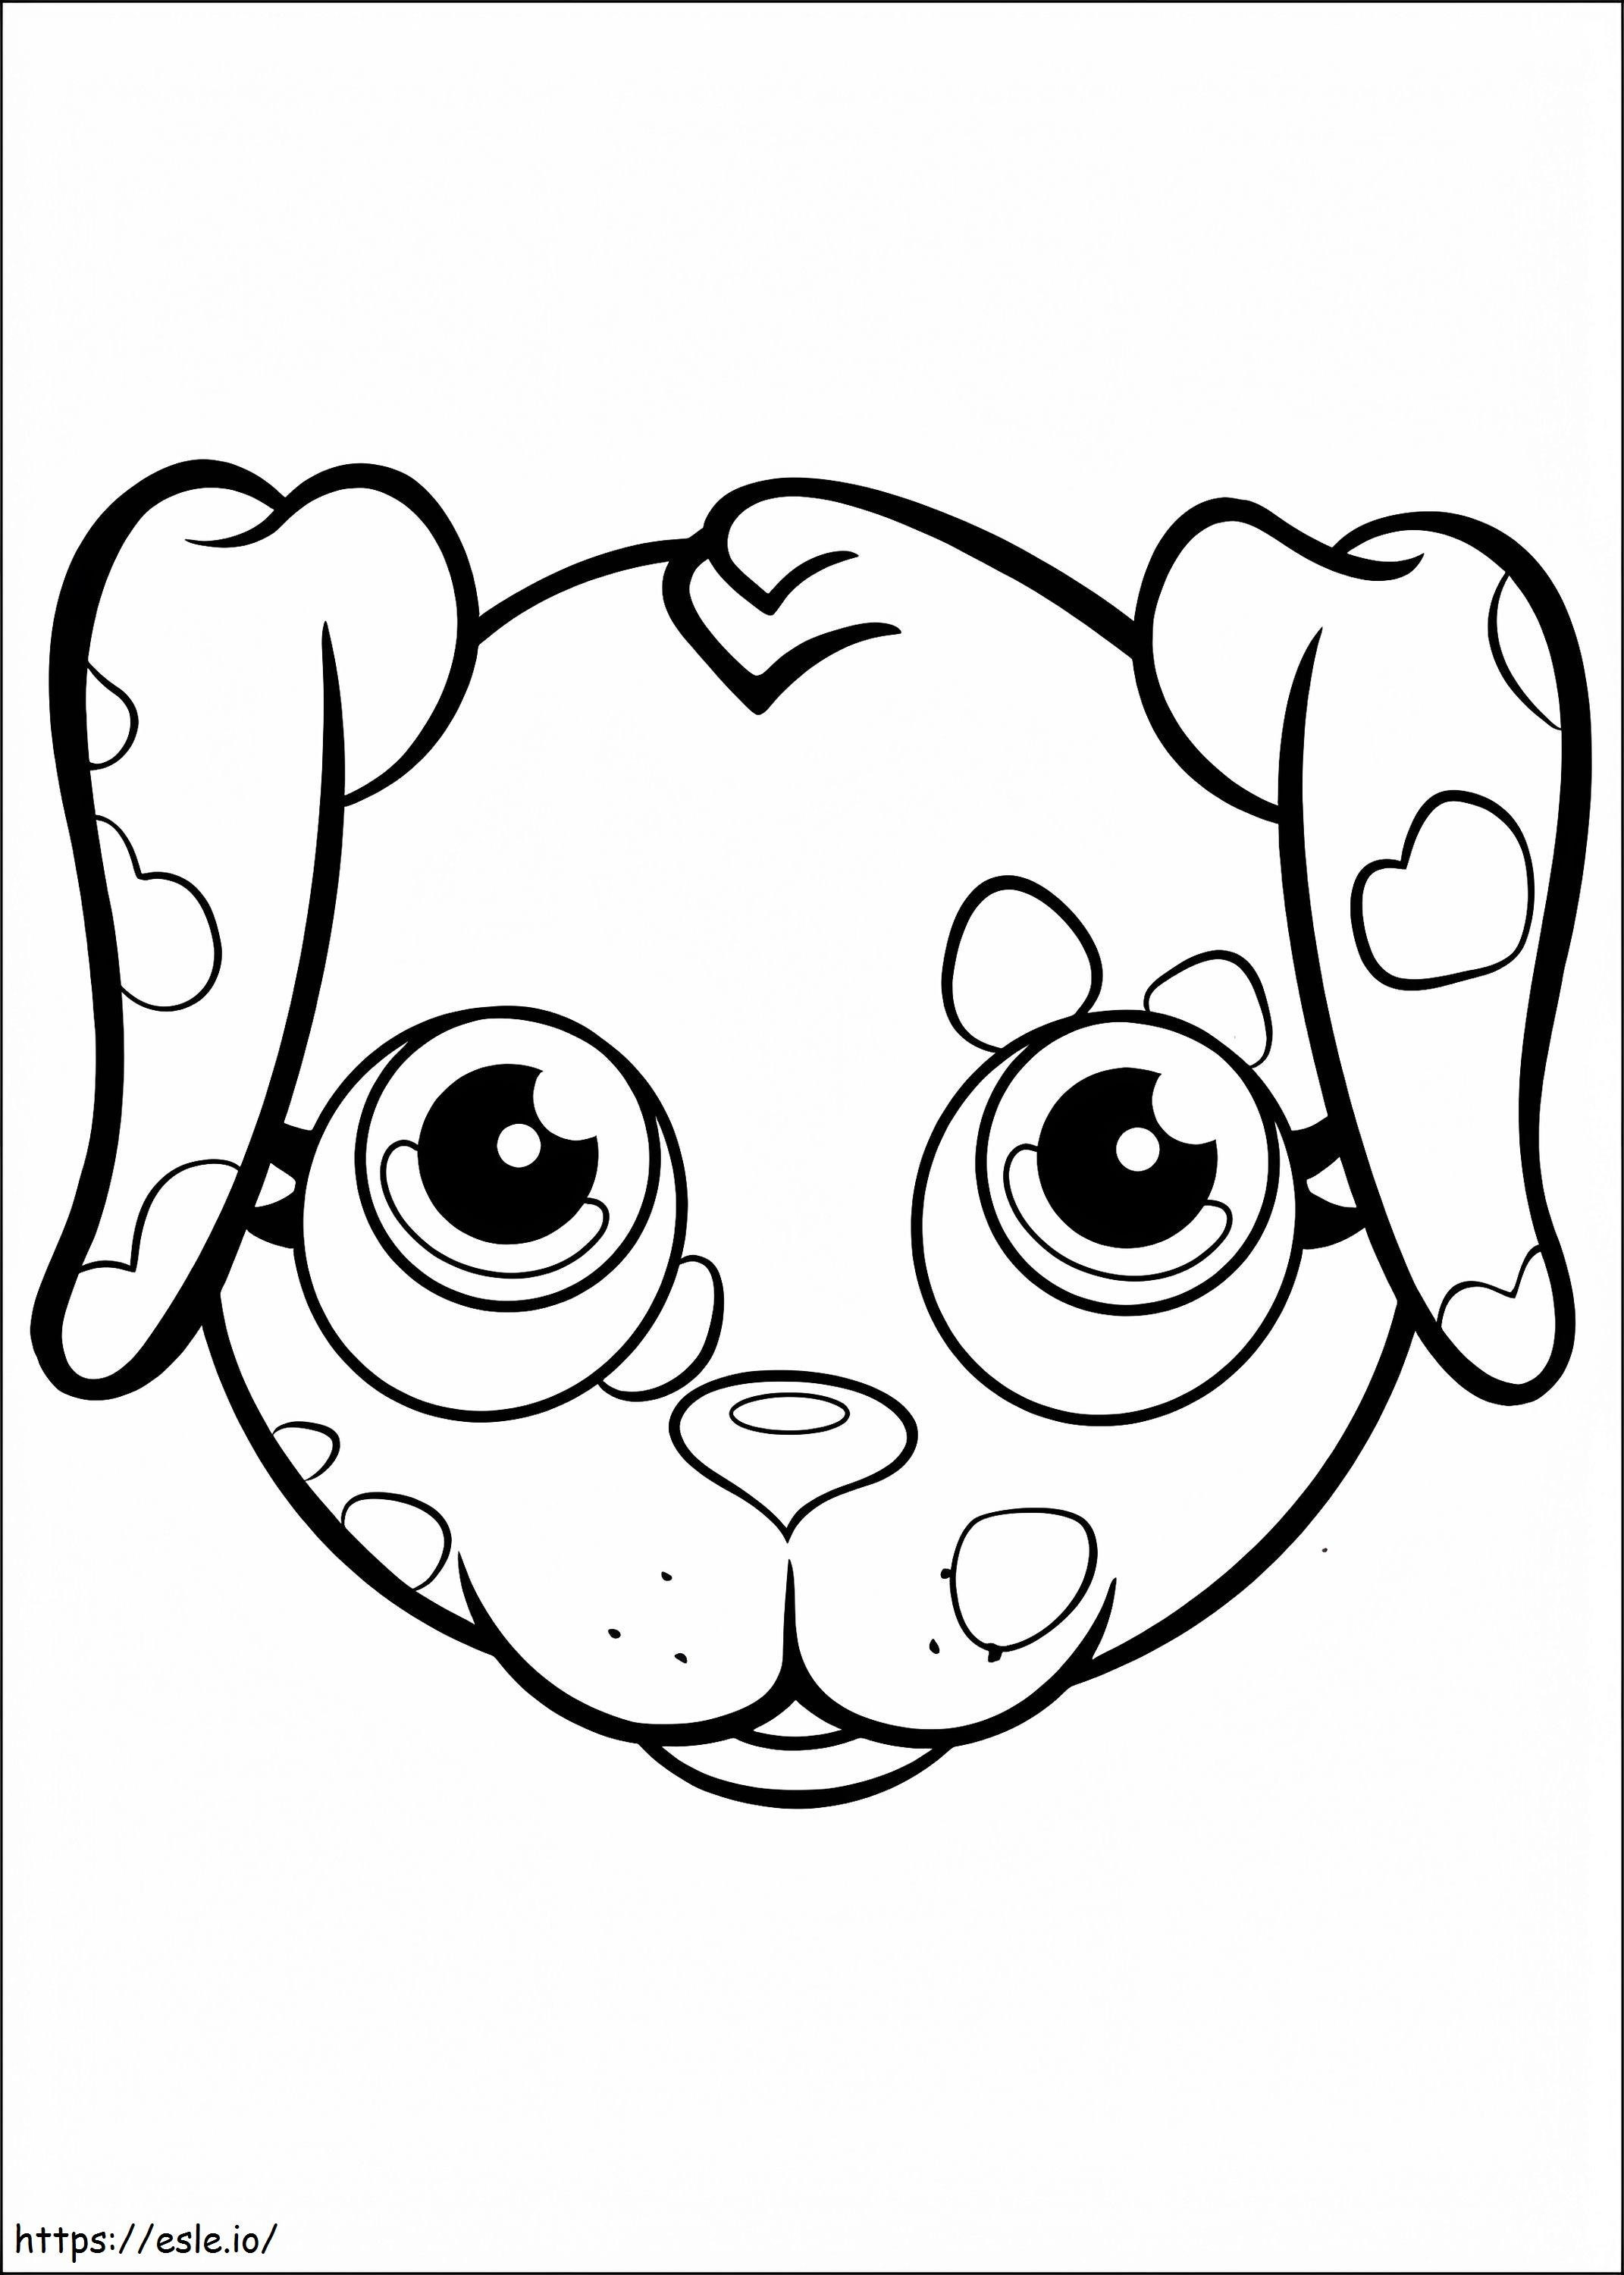 Dalmatian Pet Parade coloring page